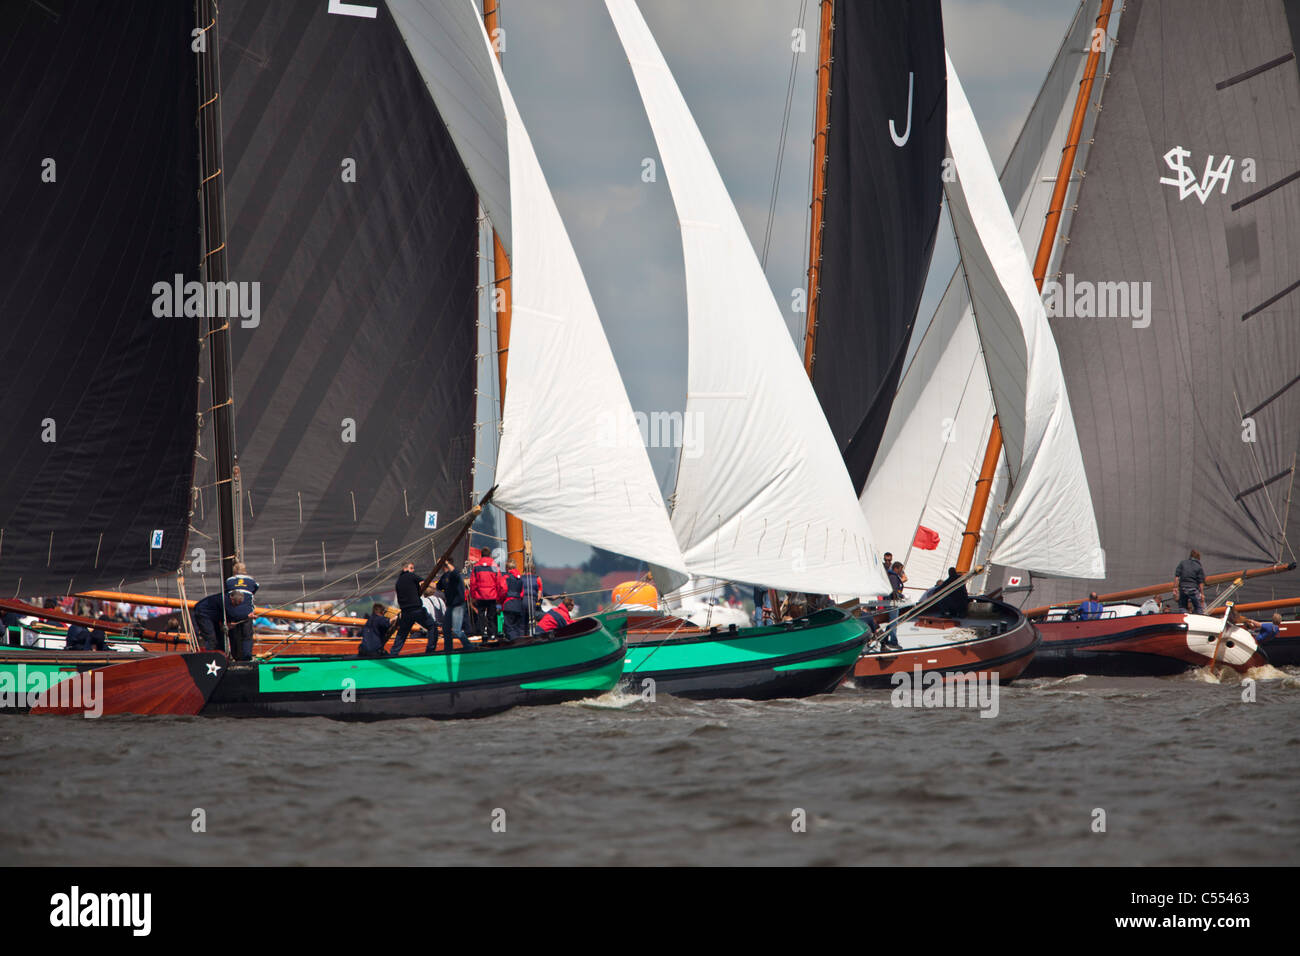 The Netherlands, Elahuizen, Sailing races called Skutsjesilen, with traditional flat bottomed cargo boats called Skutsjes. Stock Photo